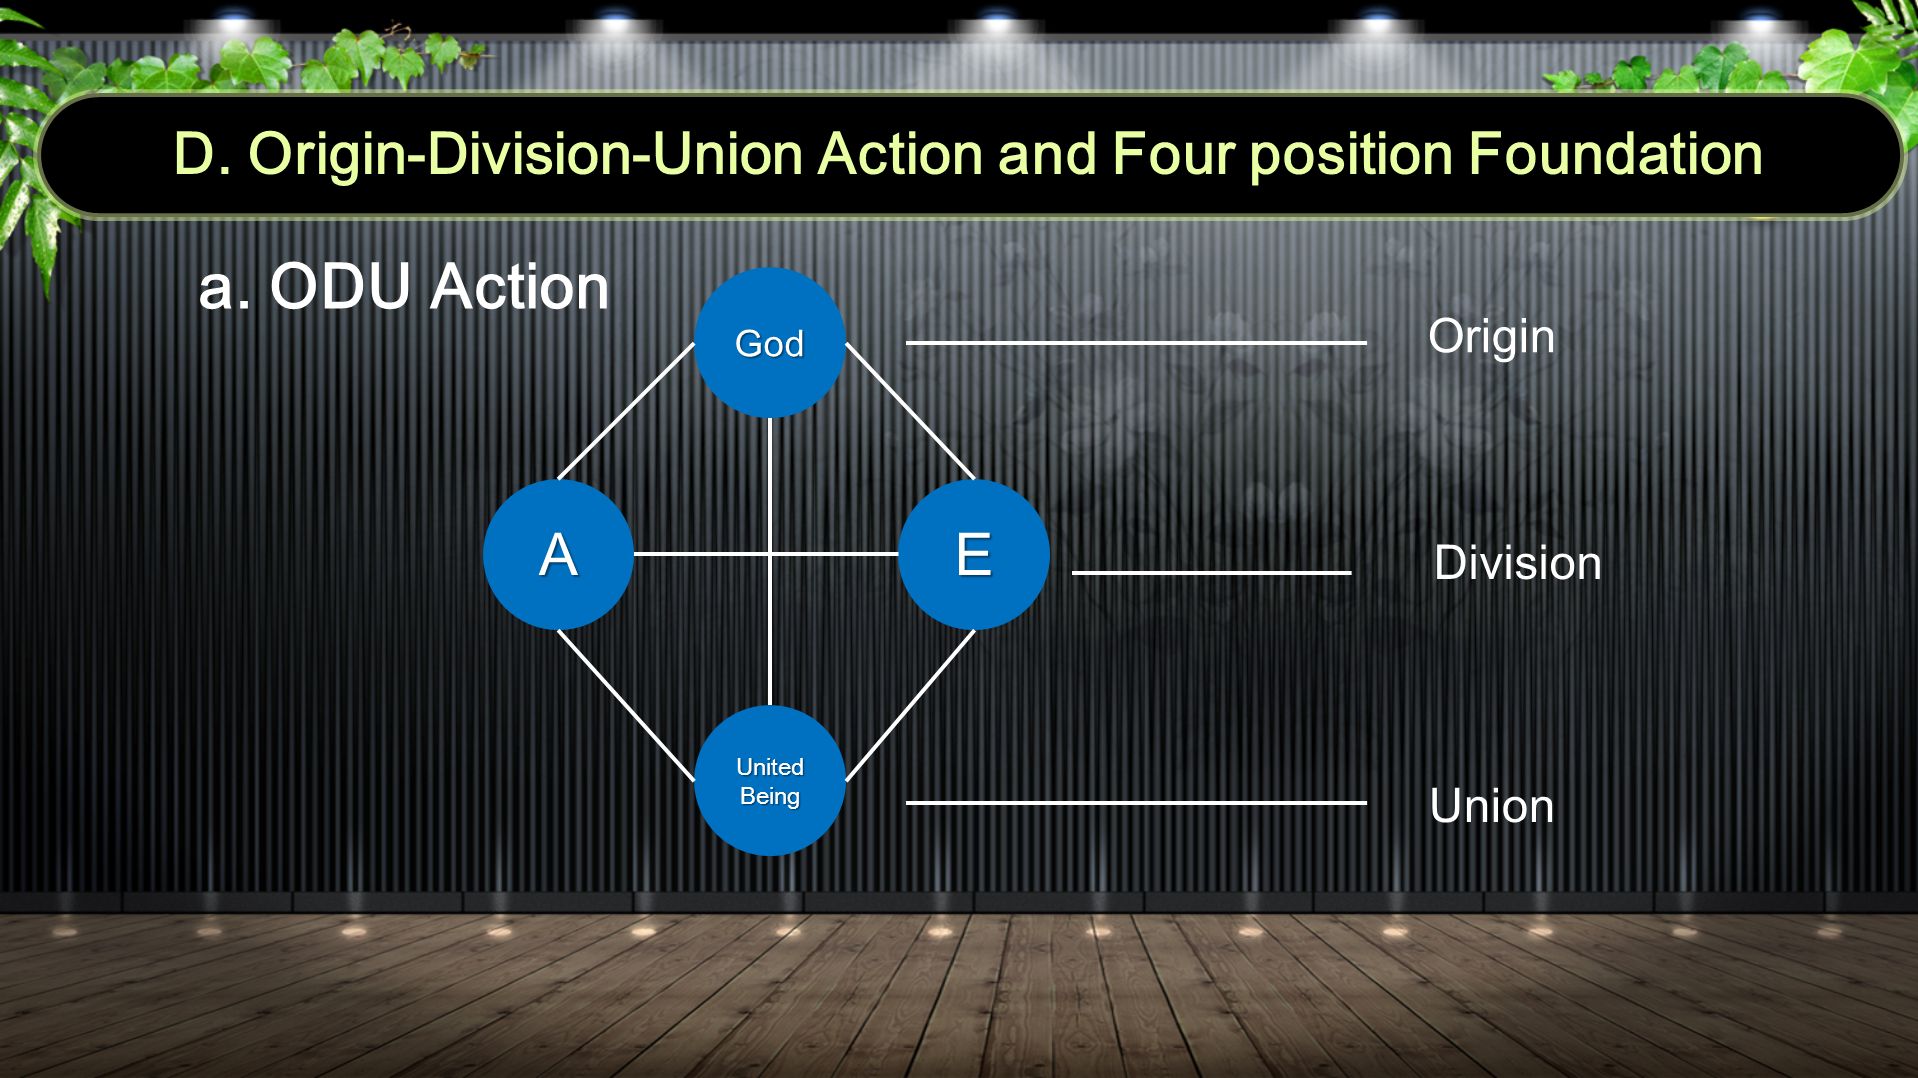 God AE United Being Origin Division Union D.